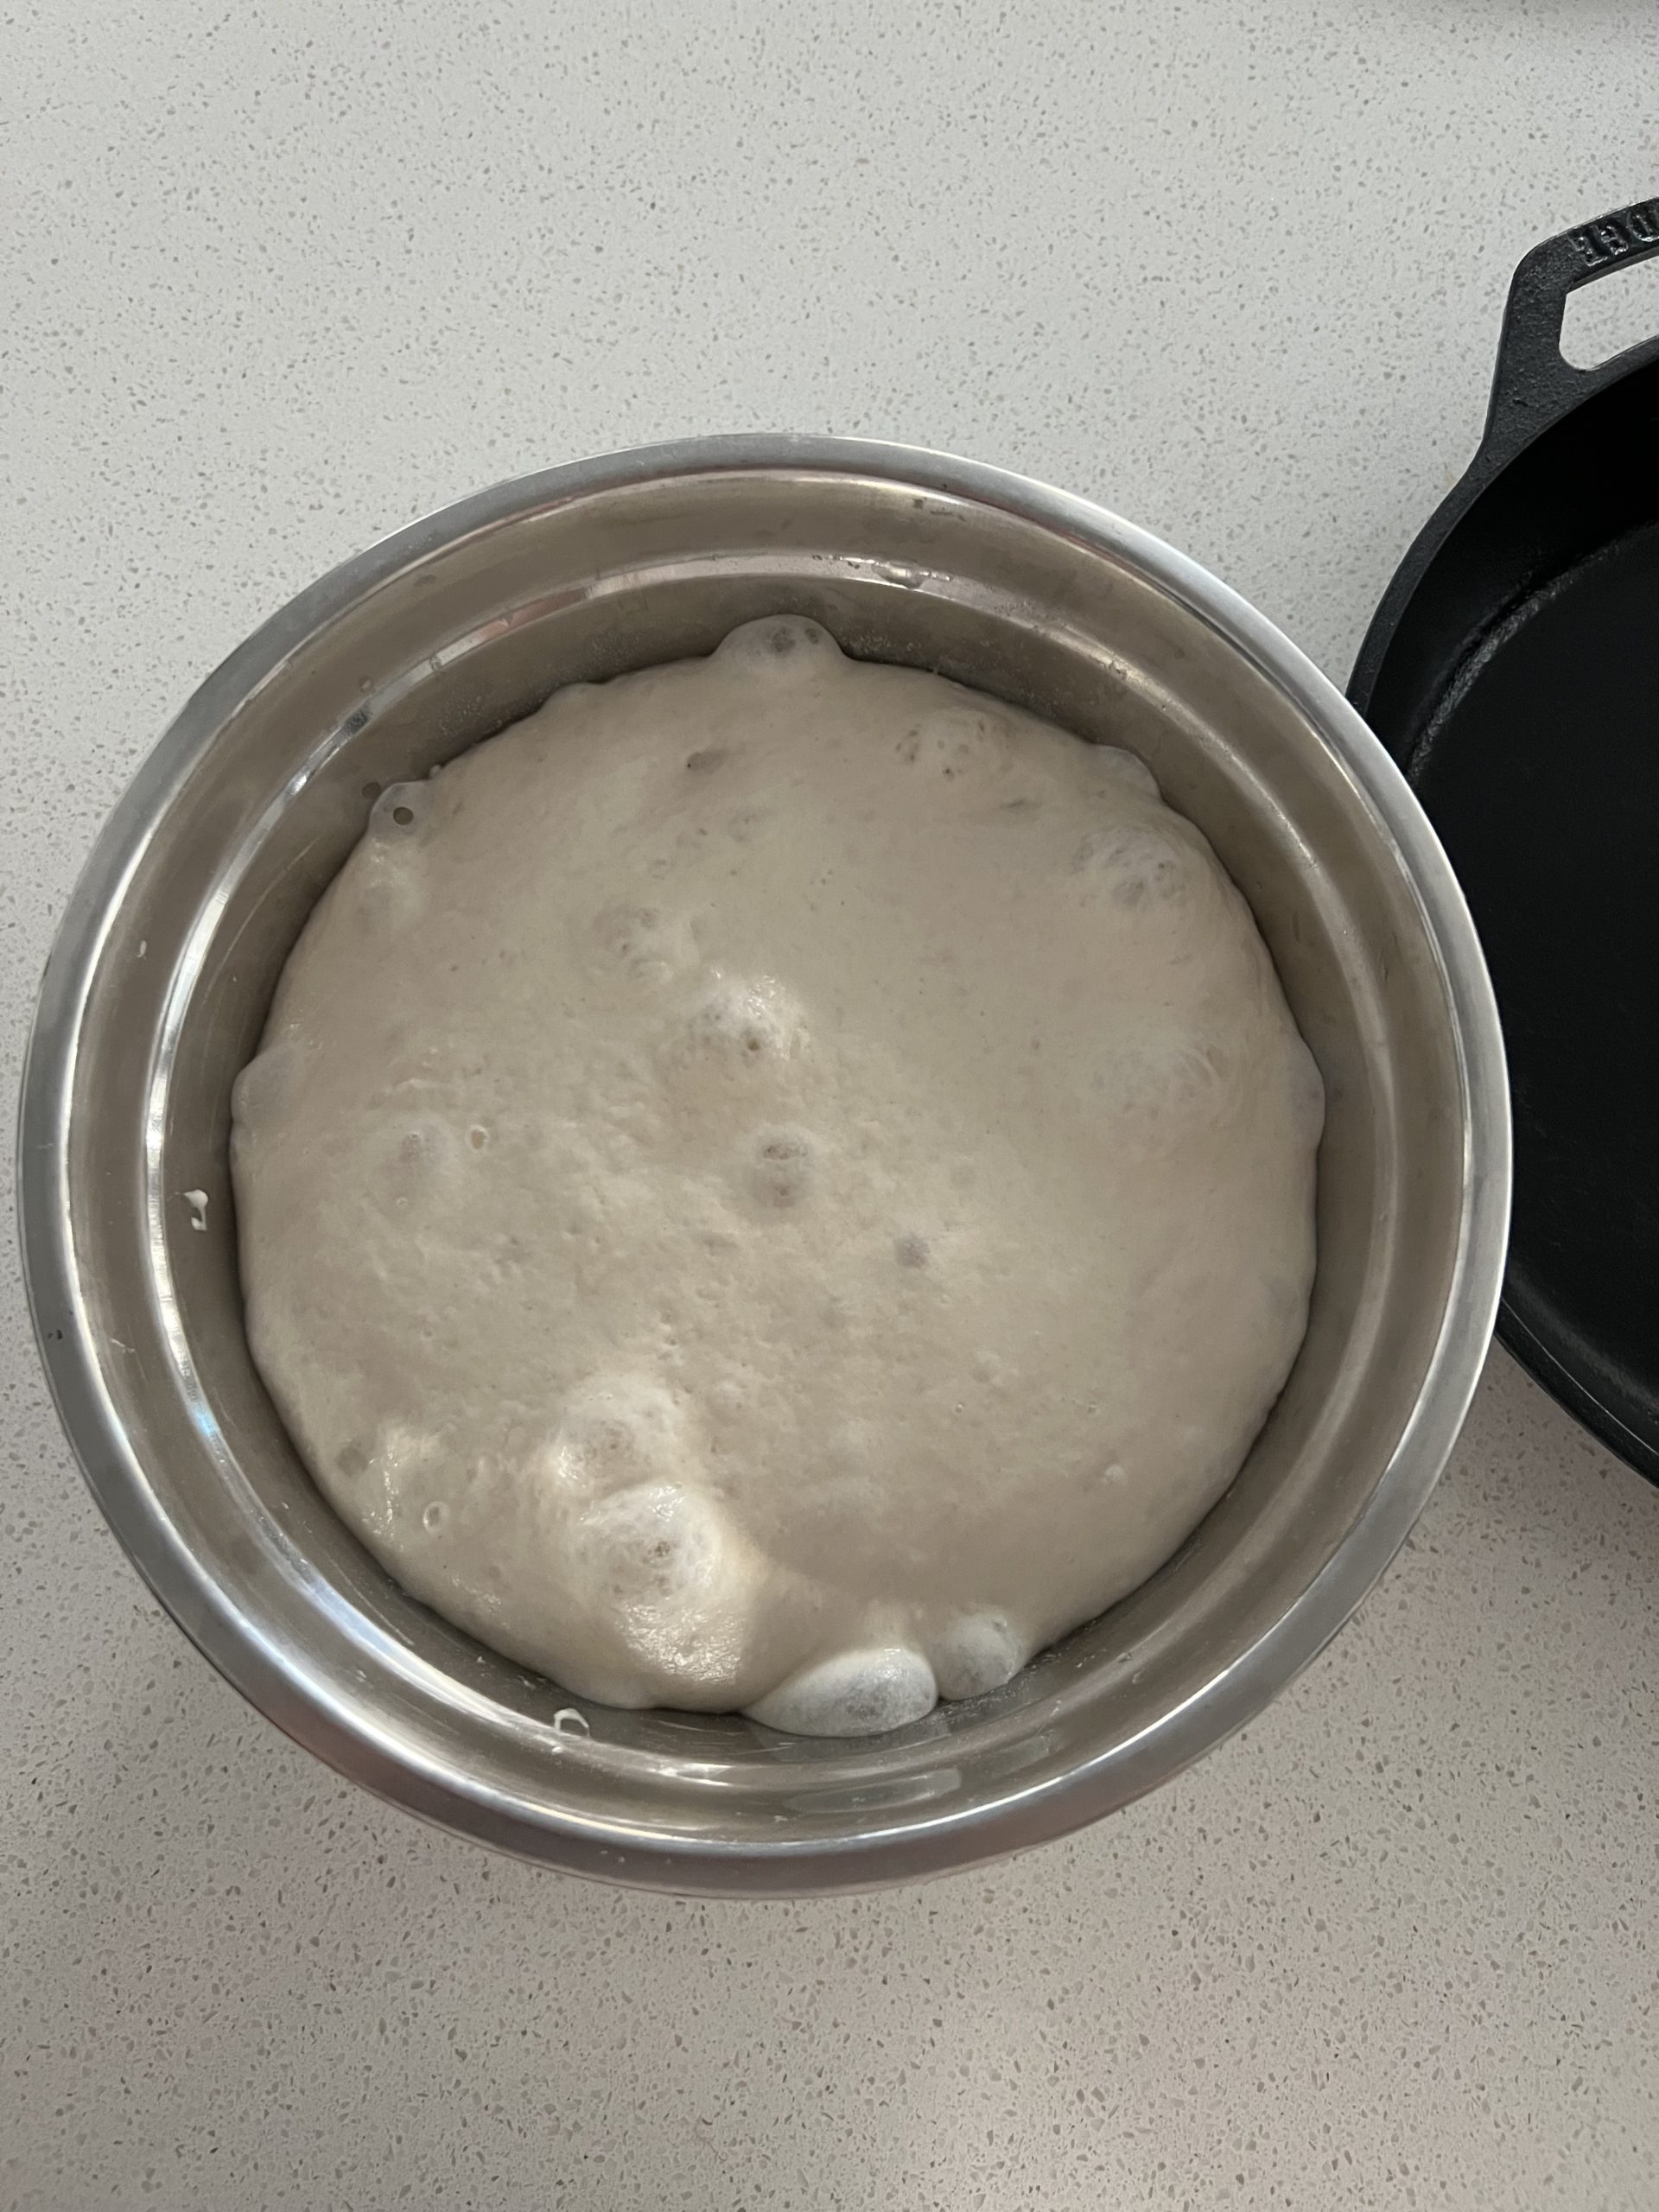 focaccia dough